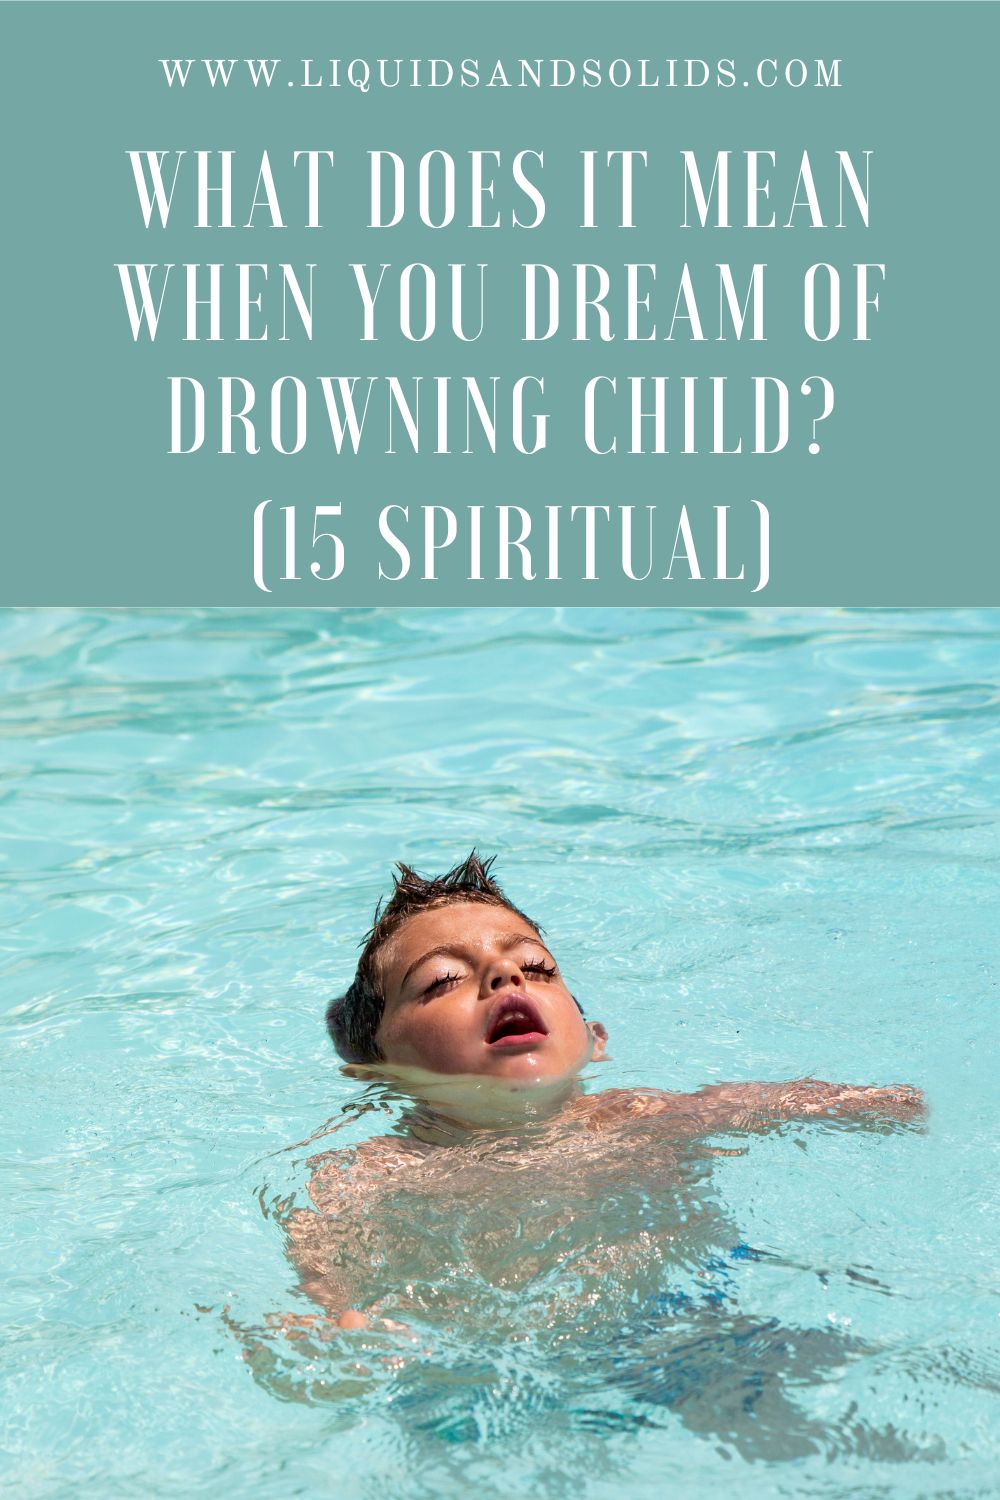 Psychological Interpretation Of Saving A Child In A Dream